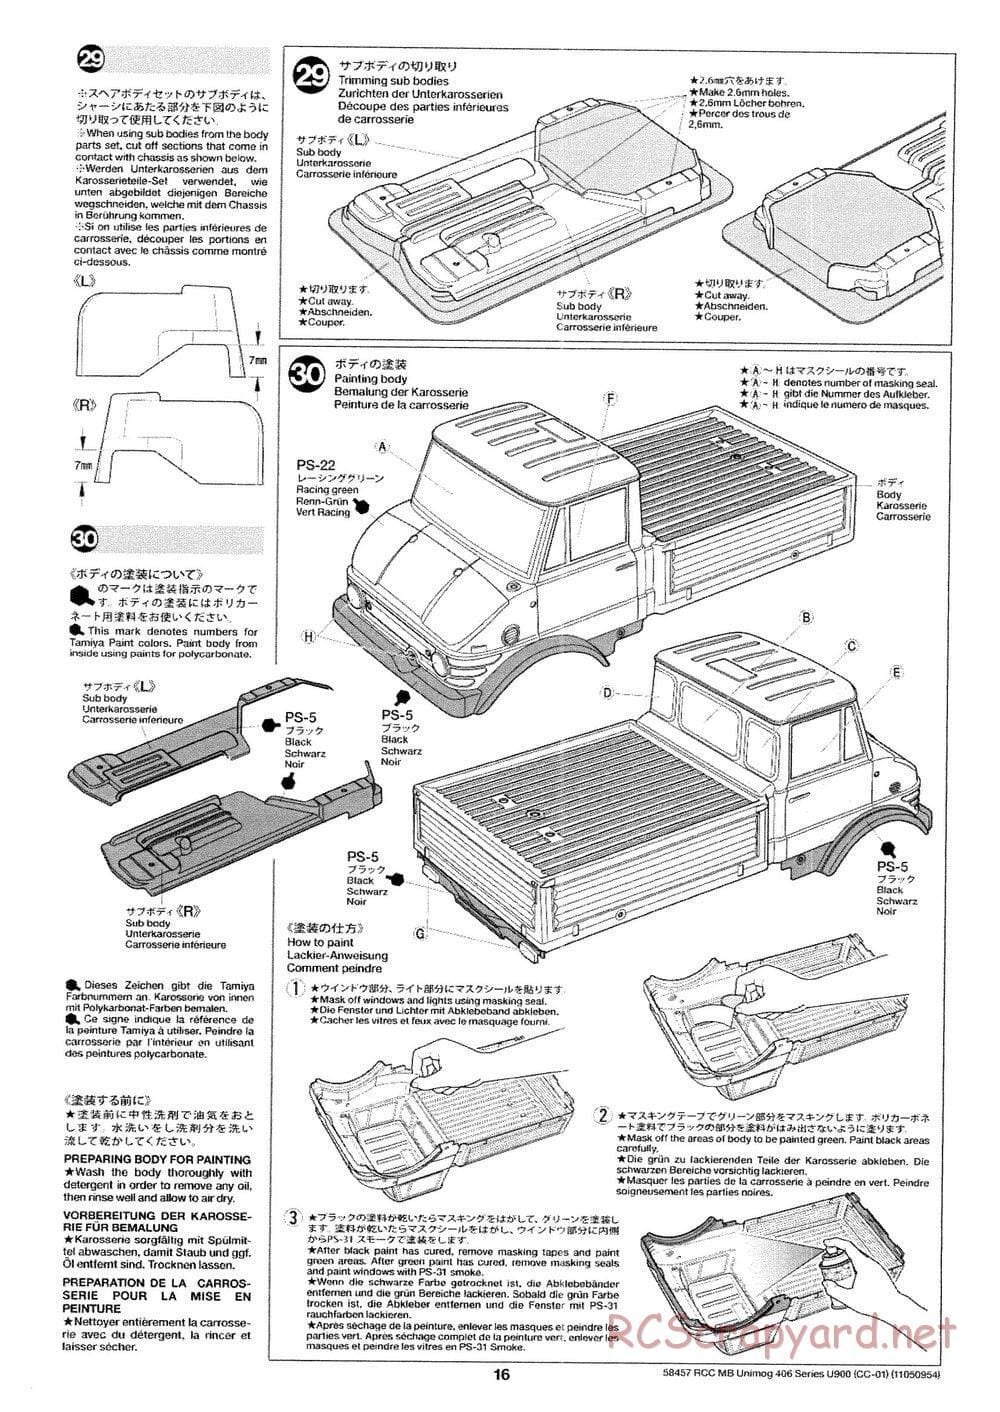 Tamiya - Mercedes-Benz Unimog 406 Series U900 - CC-01 Chassis - Manual - Page 16